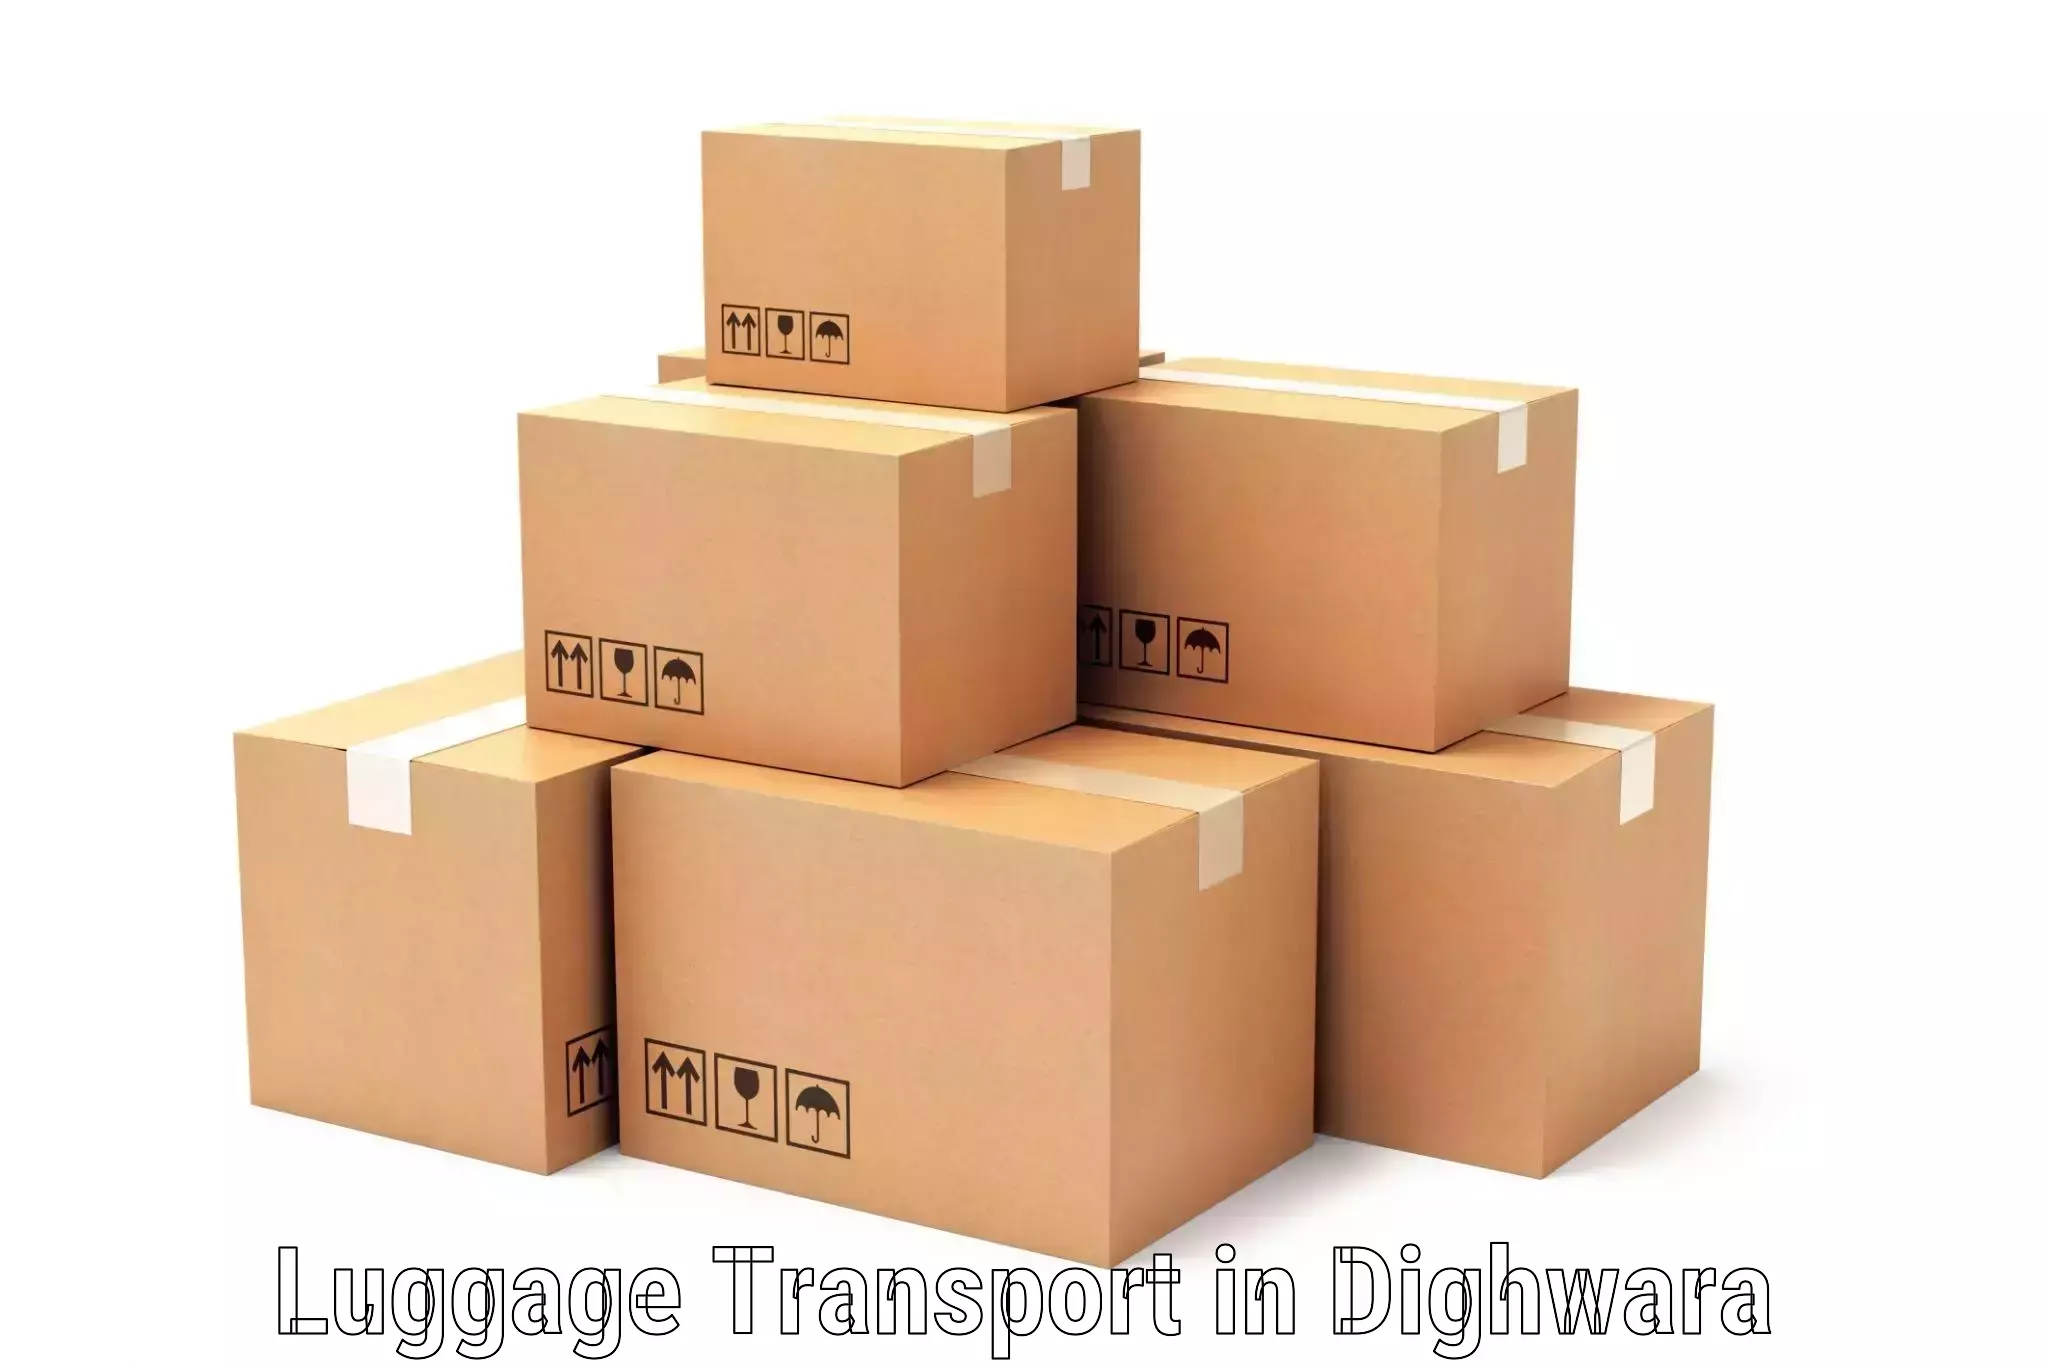 Business luggage transport in Dighwara